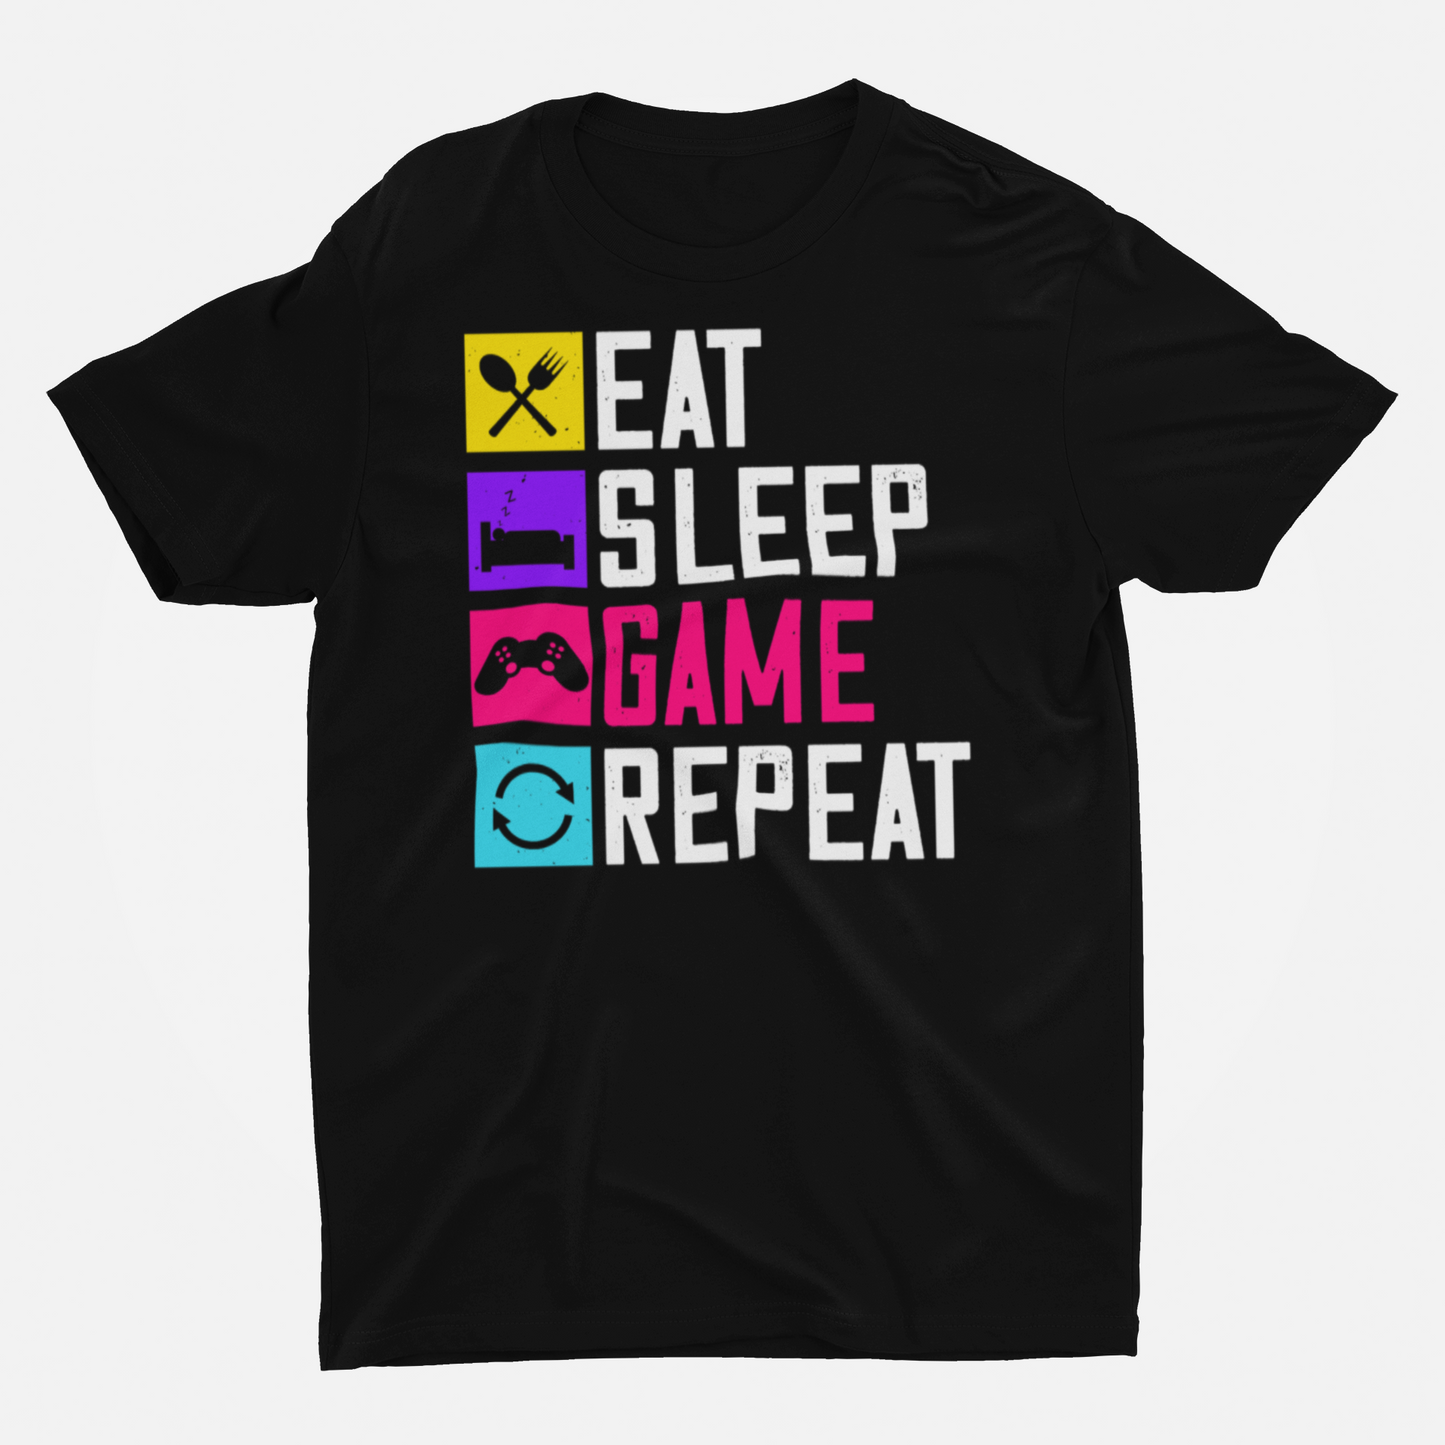 Eat Sleep Game Repeat Black T-Shirt For Men